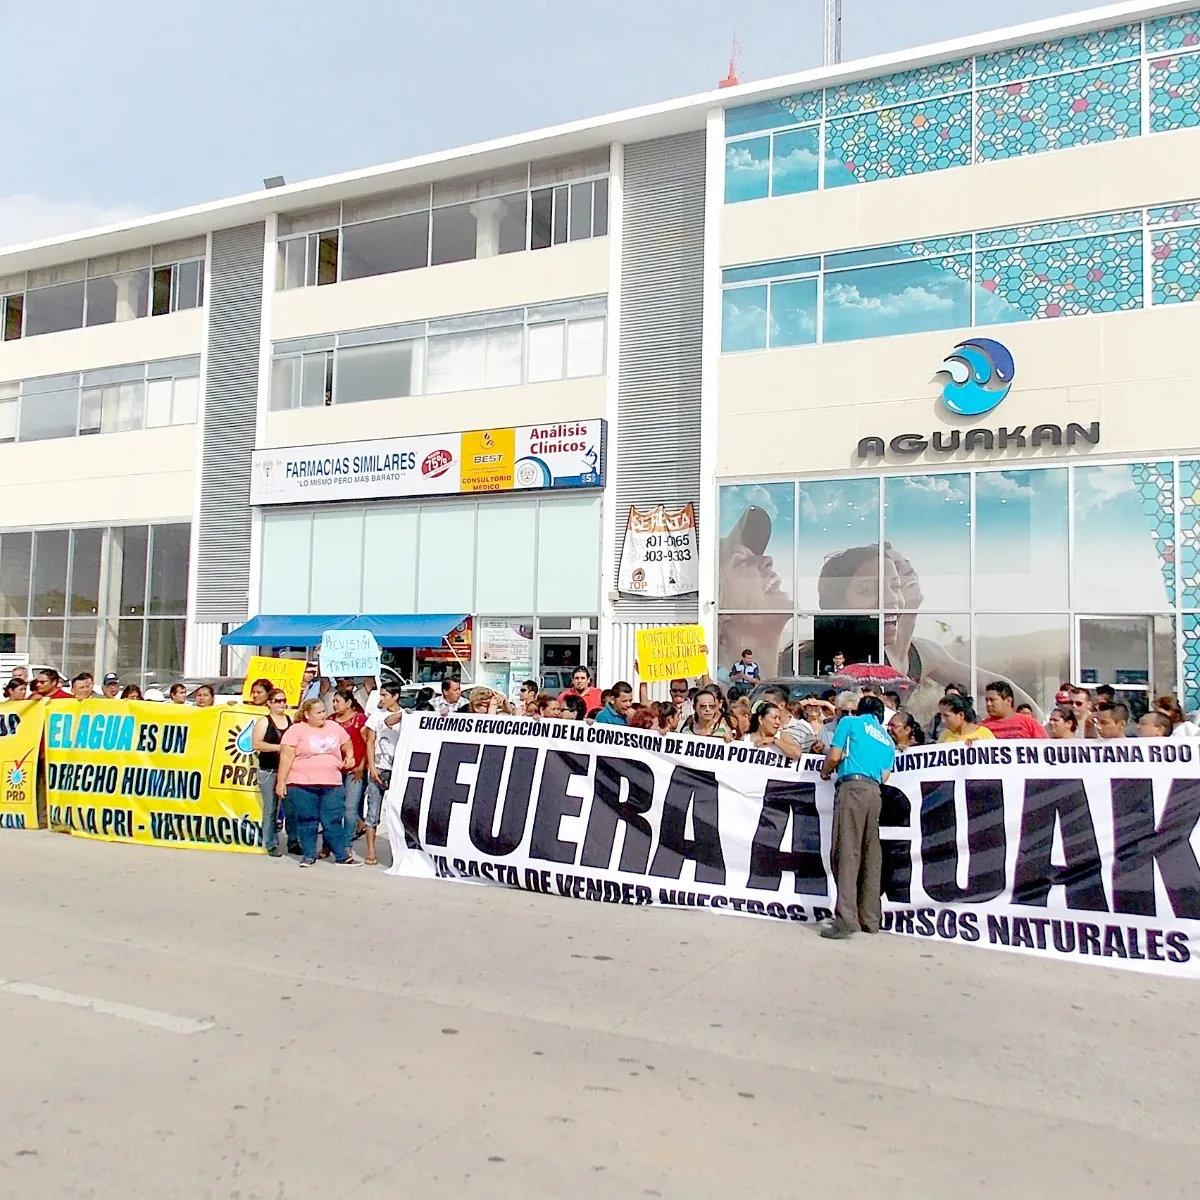 Aguakan enfrenta problemas de suministro por falta de energía eléctrica en Cancún”